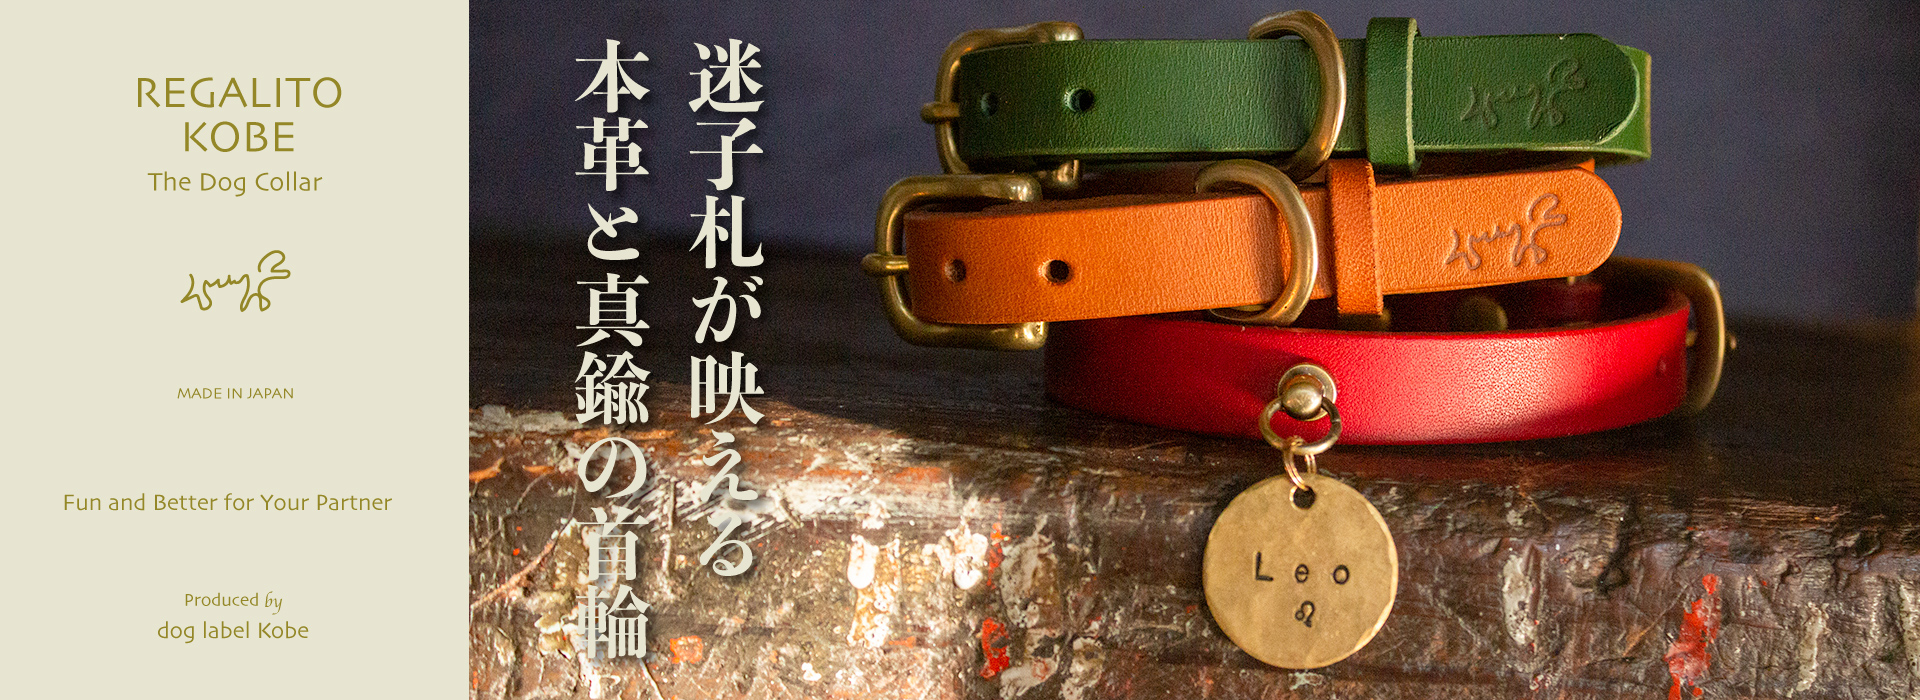 Regalito Kobe The Dog Collar　迷子札が映える本革と真鍮の首輪